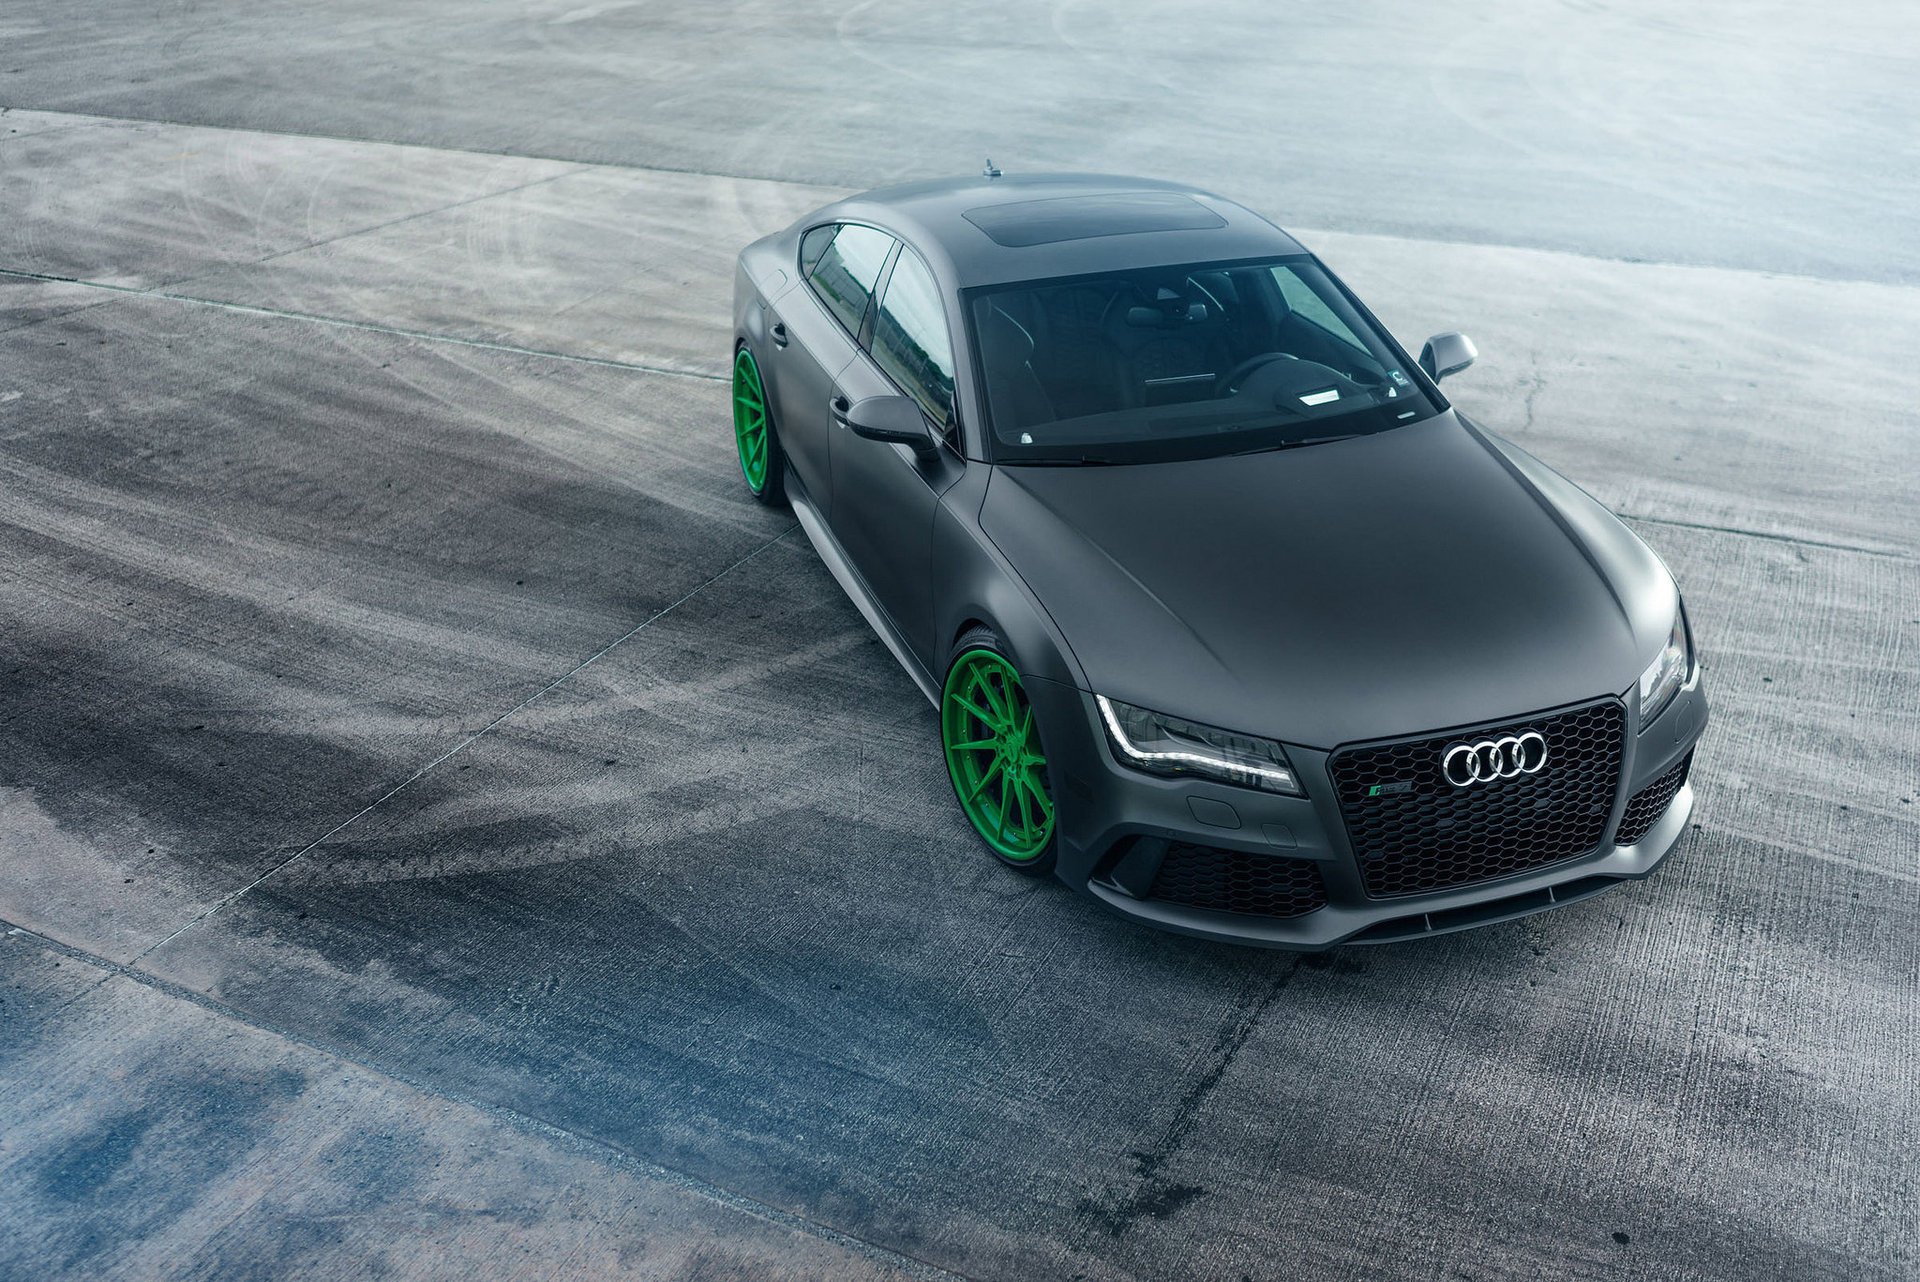 Tuned Audi on the background of gray asphalt